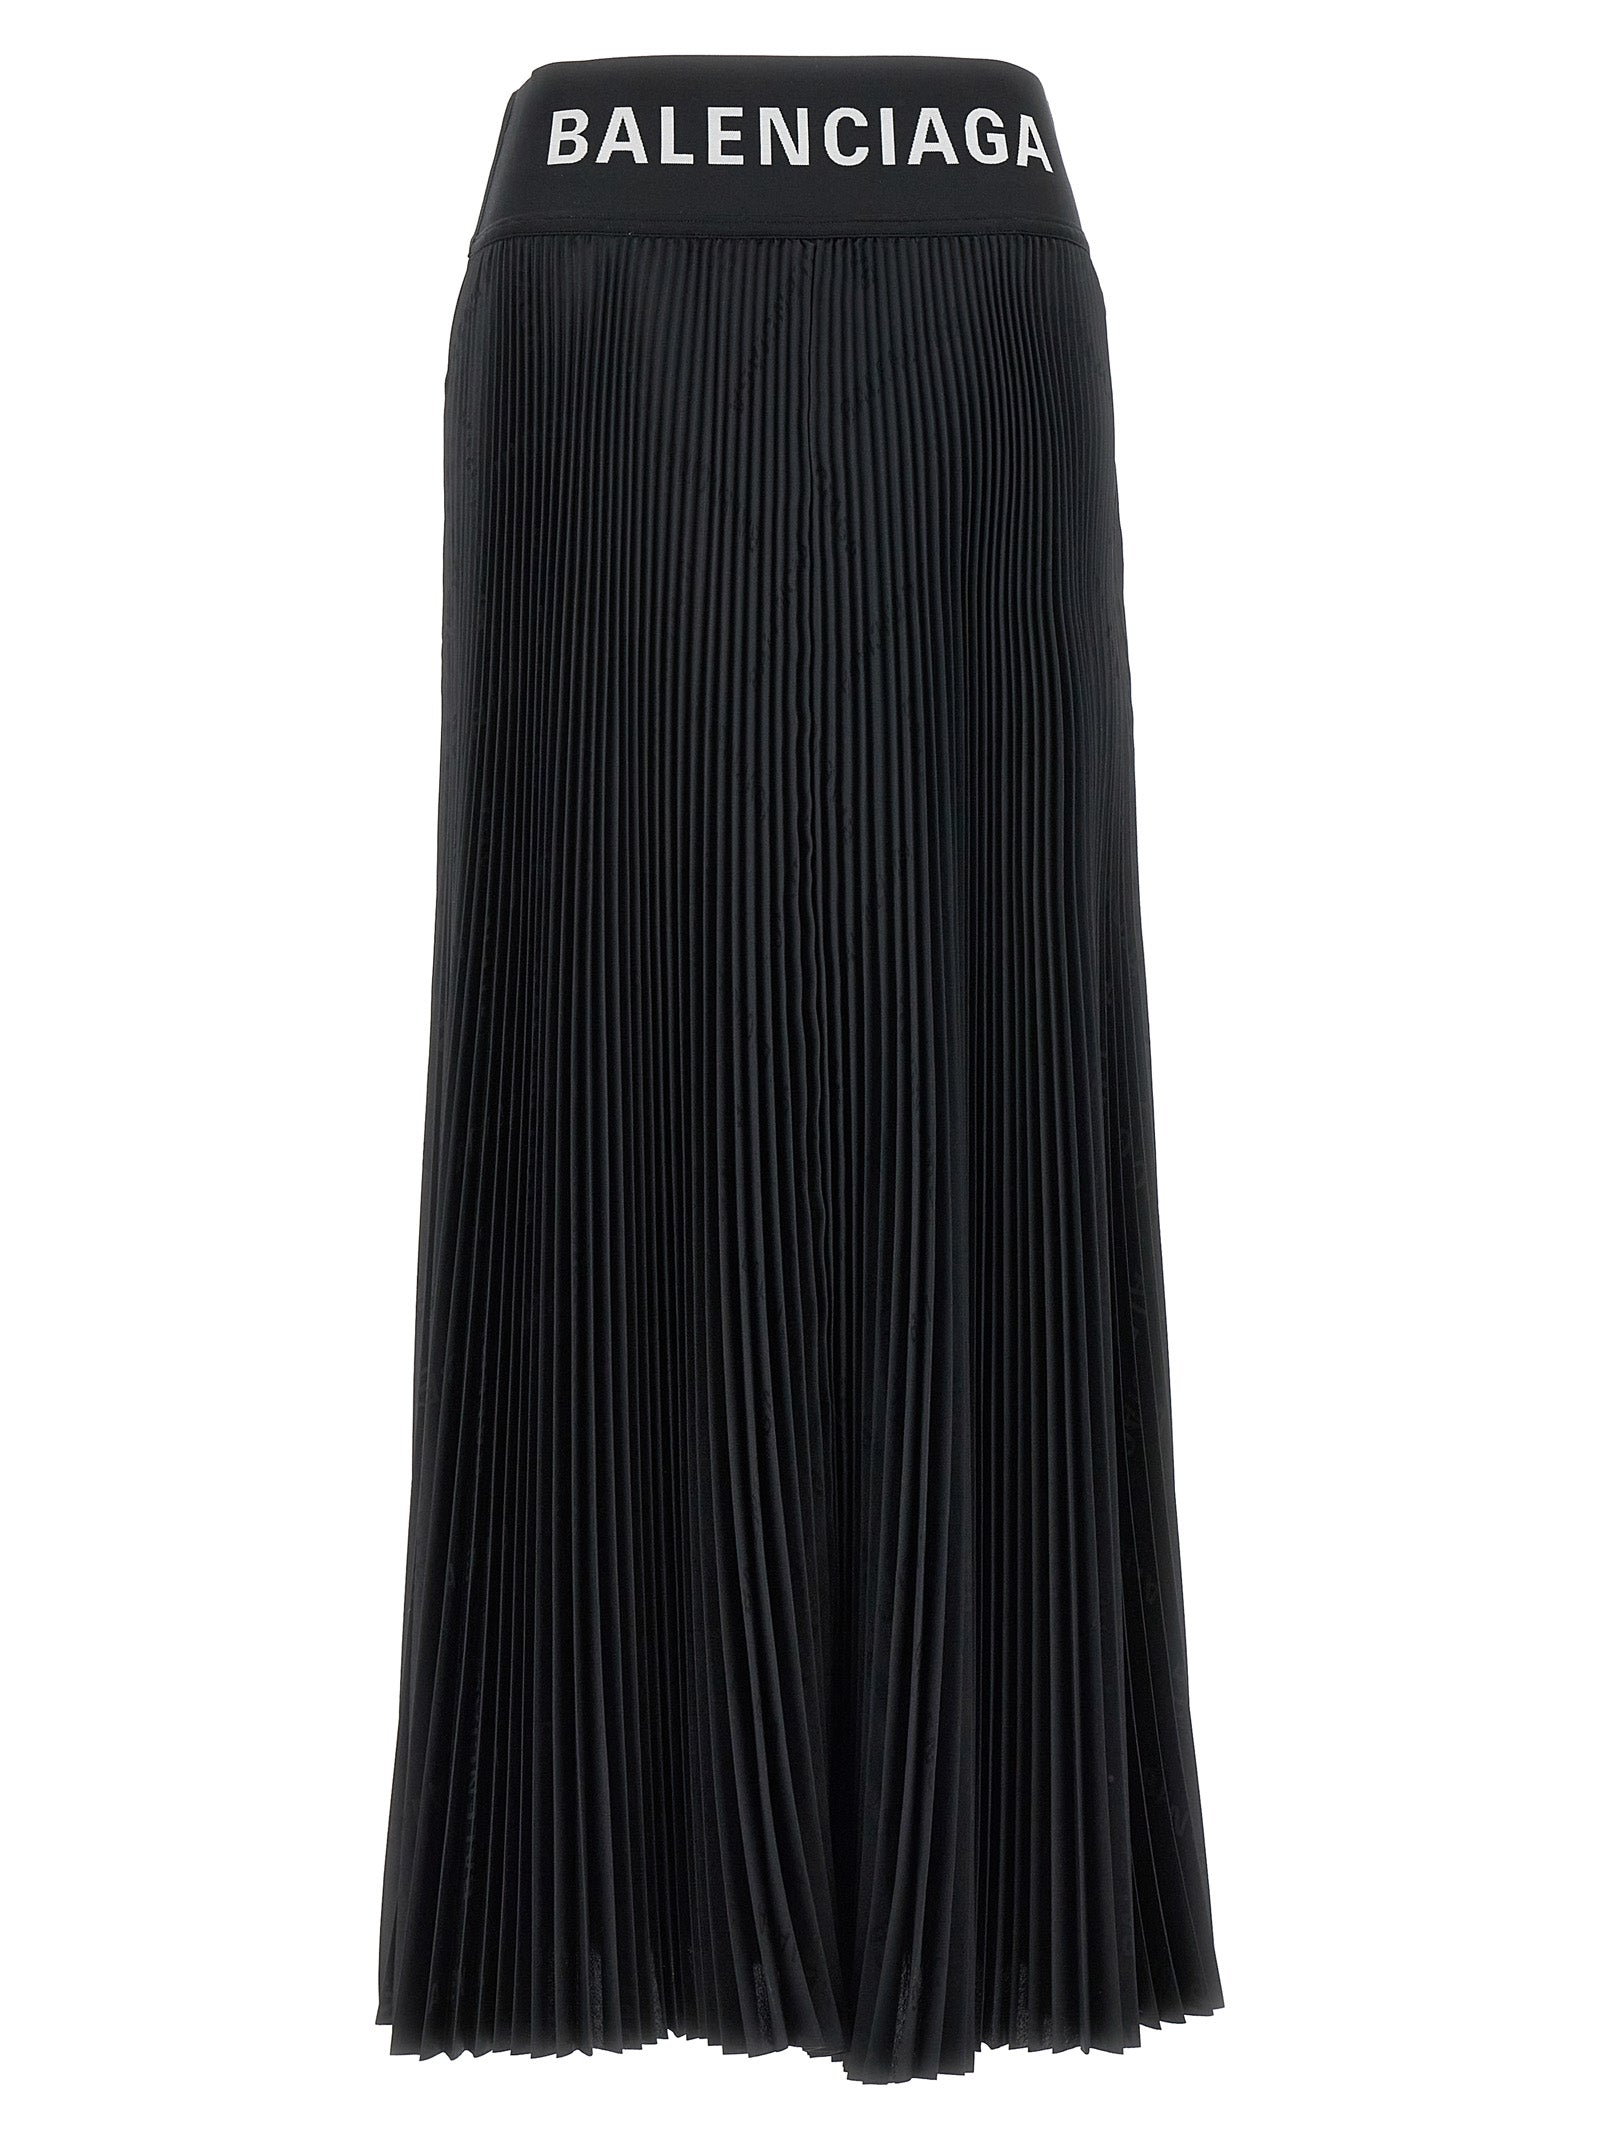 Balenciaga Logo Pleated Skirt Skirts Black